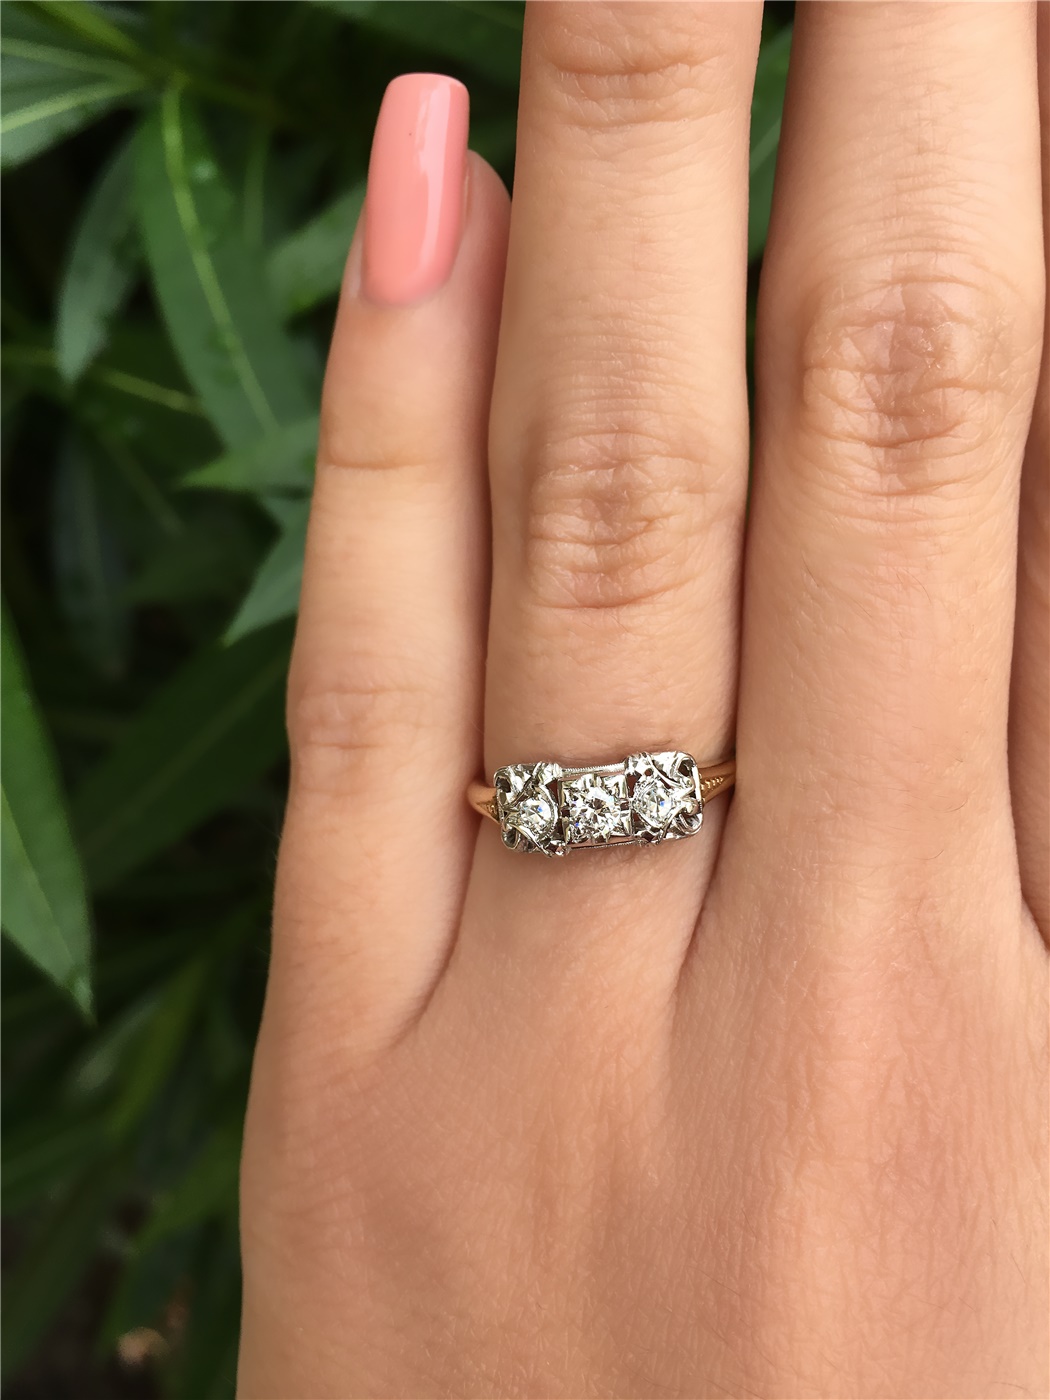 rock engagement rings